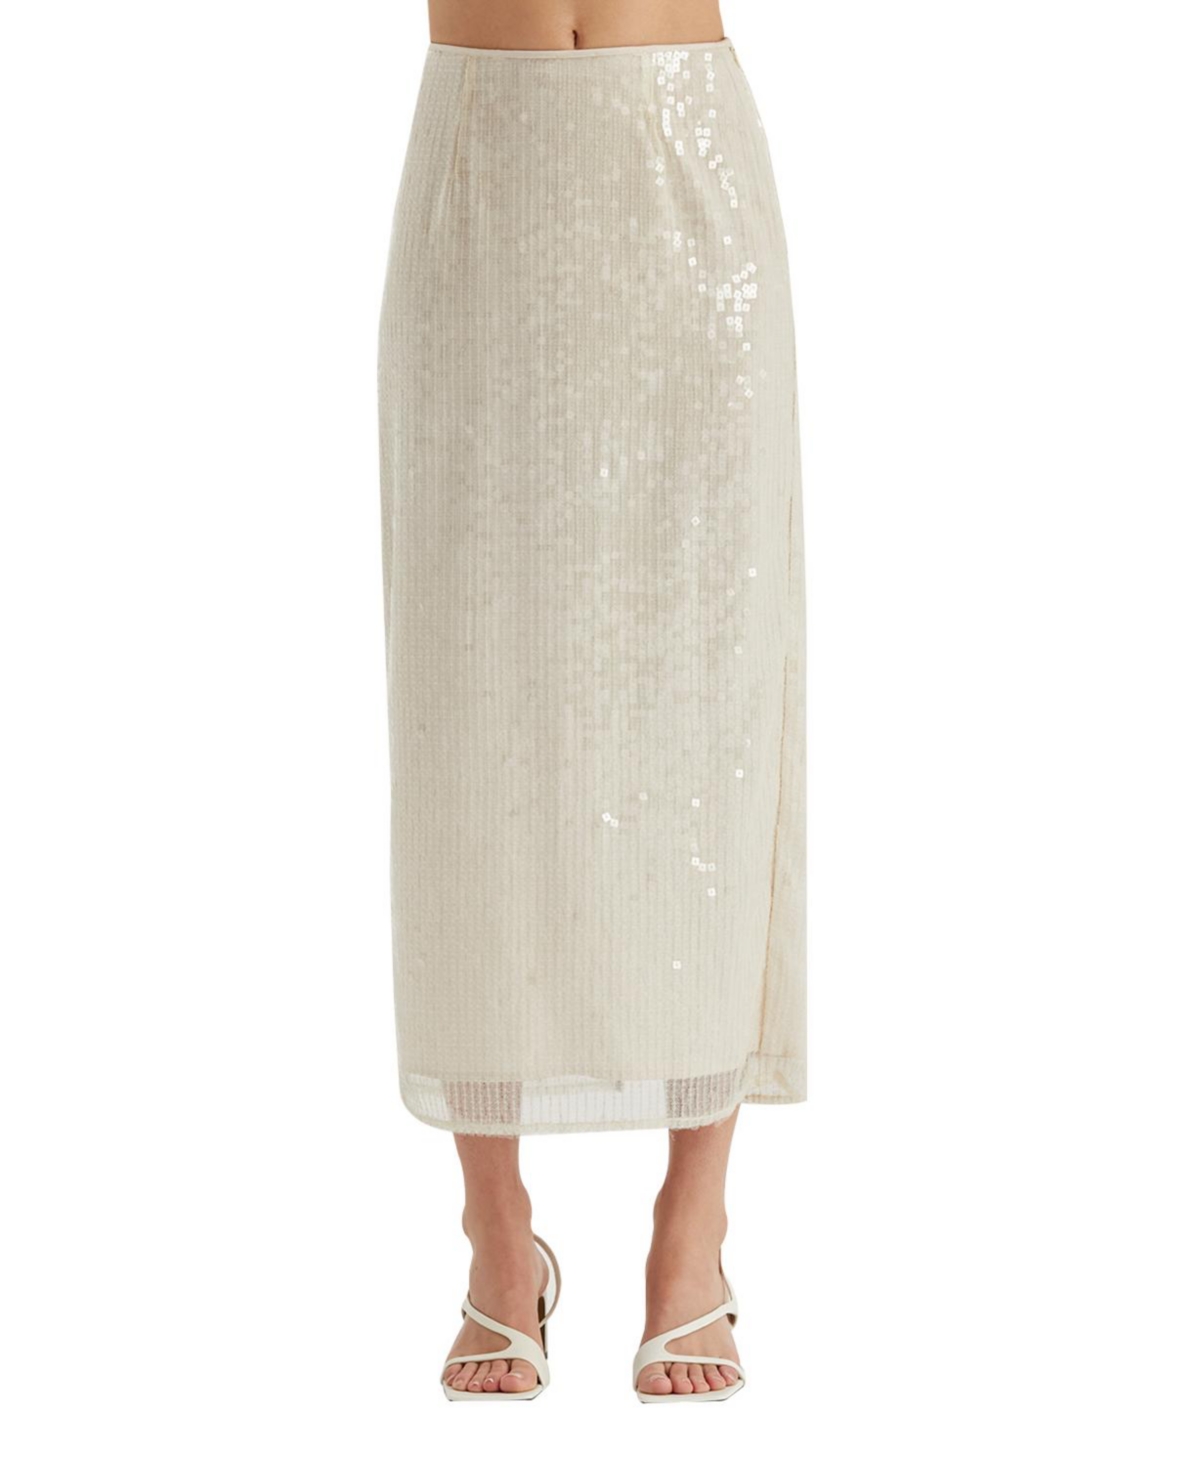 Women's Mavis Sequins Midi Skirt - Open white + cream